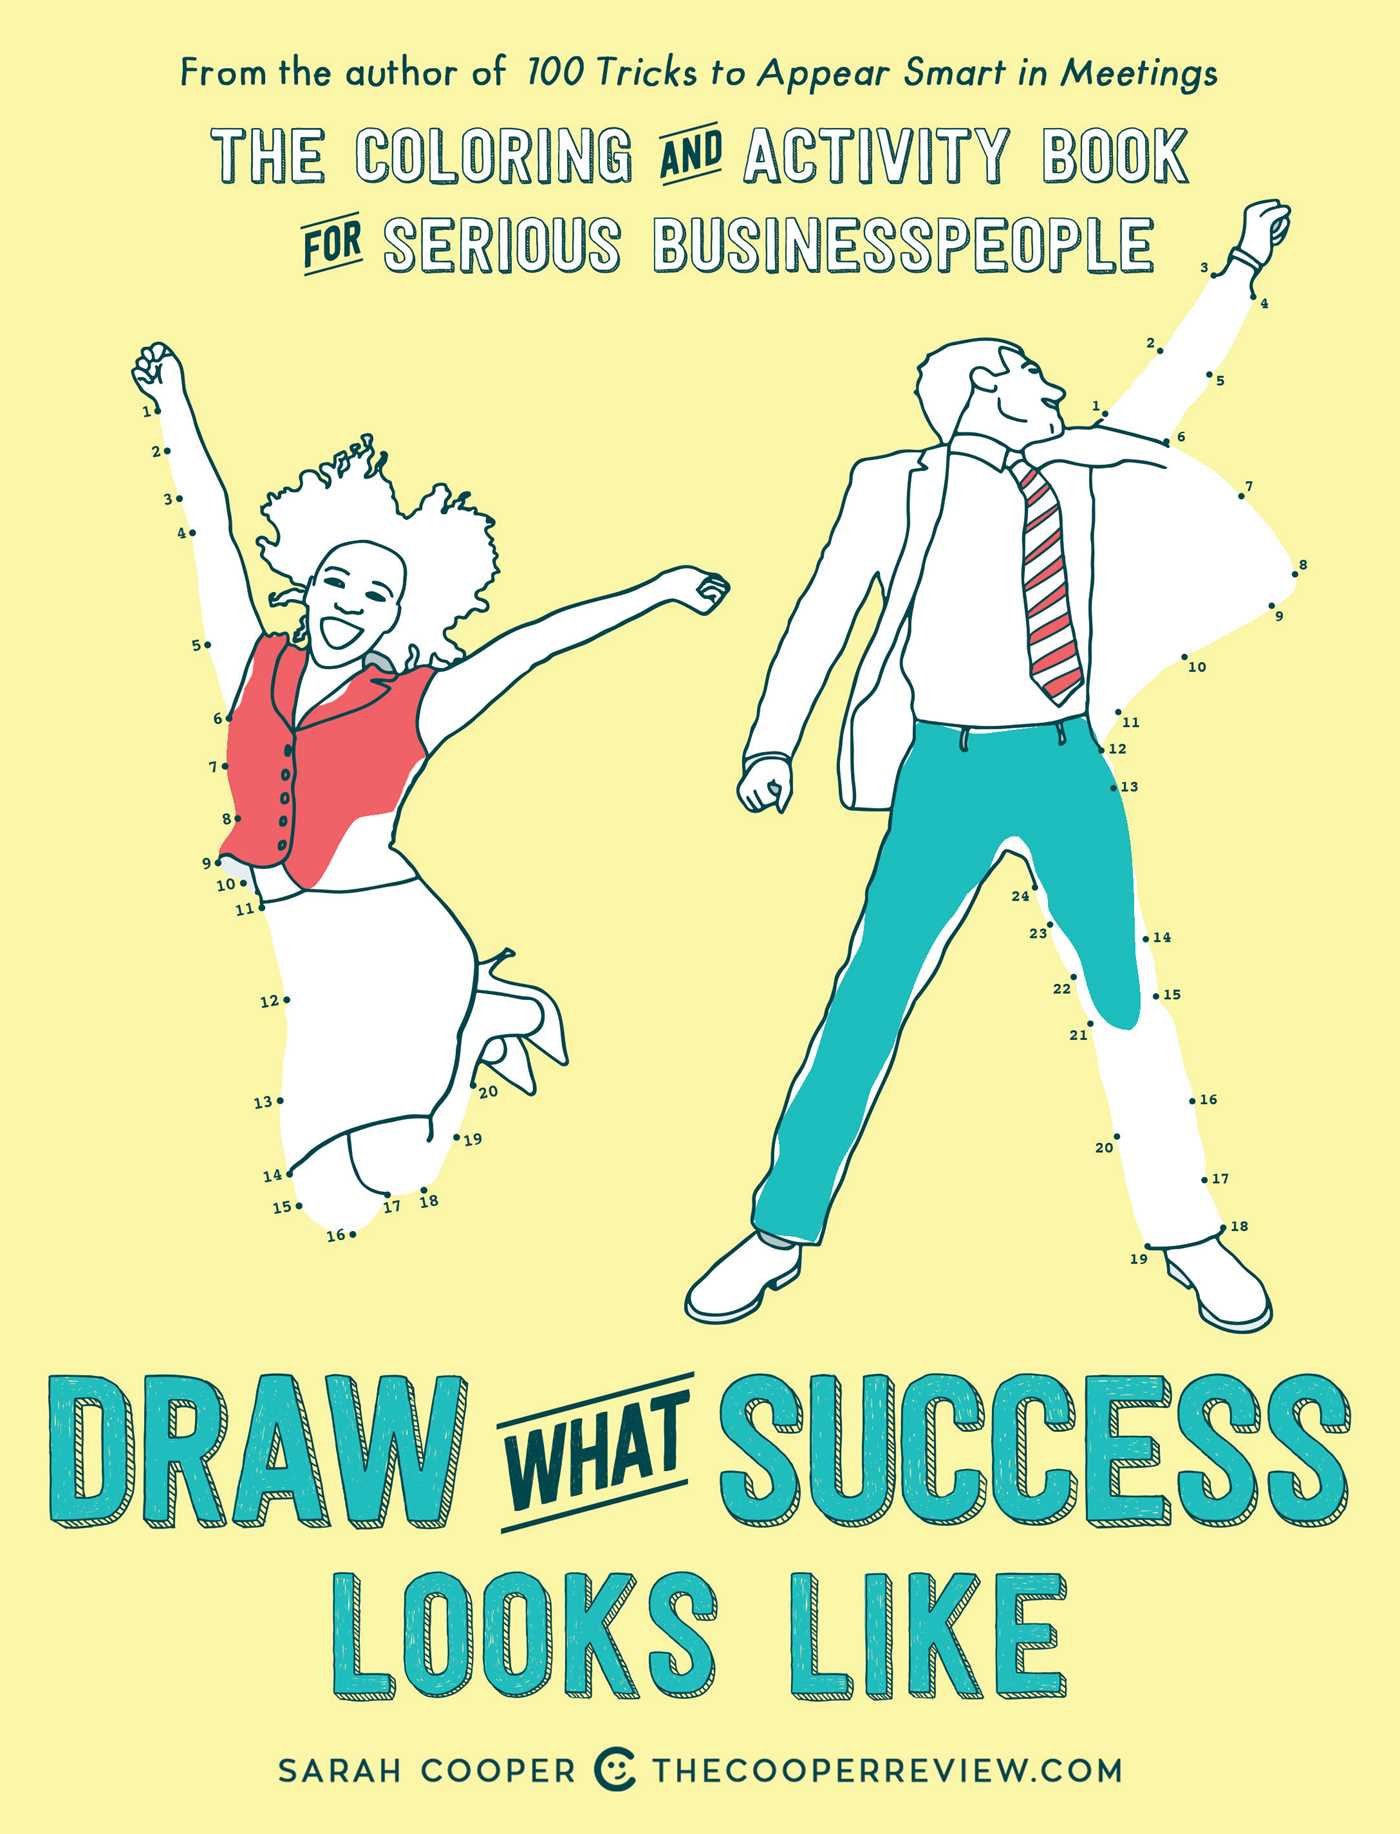 Draw What Success Looks Like | Sarah Cooper